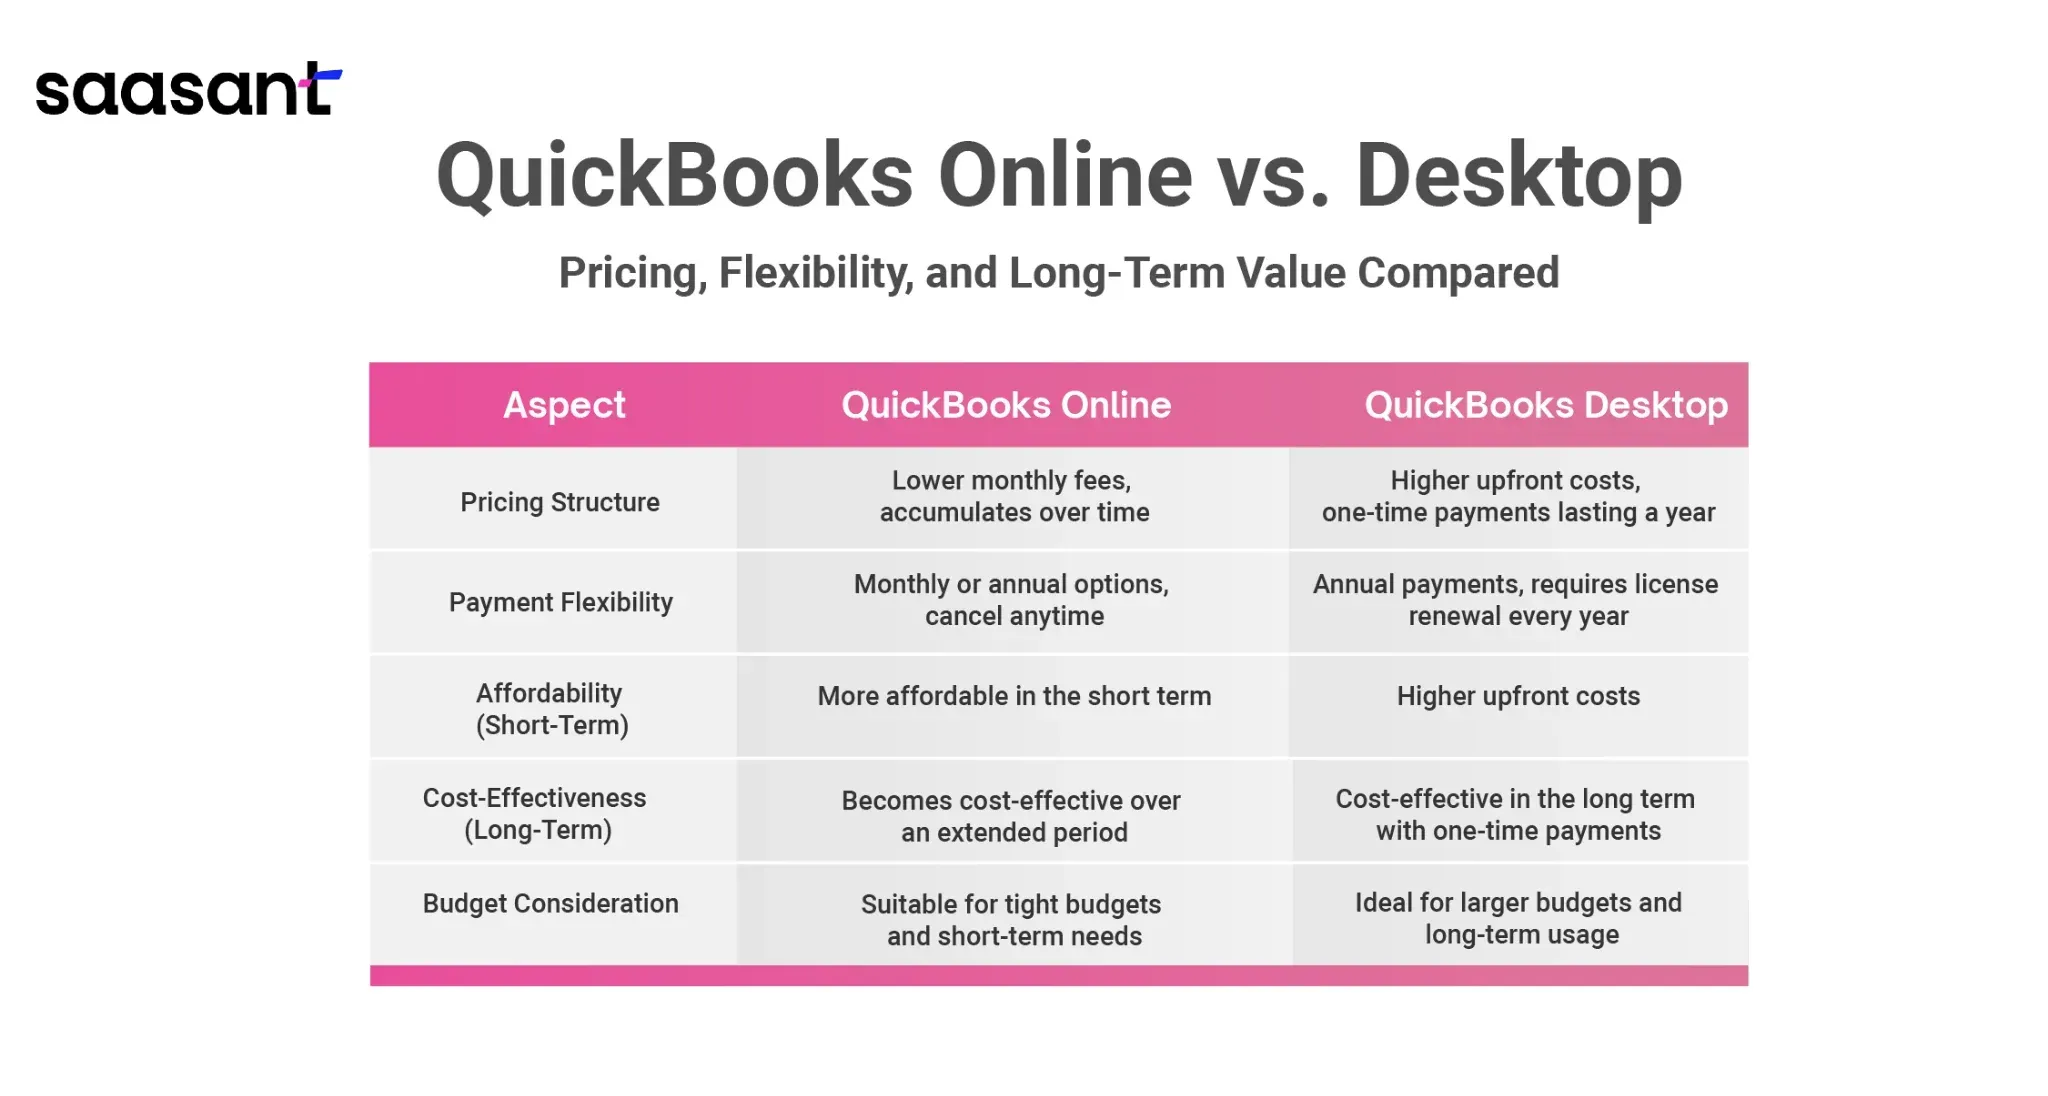 QuickBooks Online vs Desktop